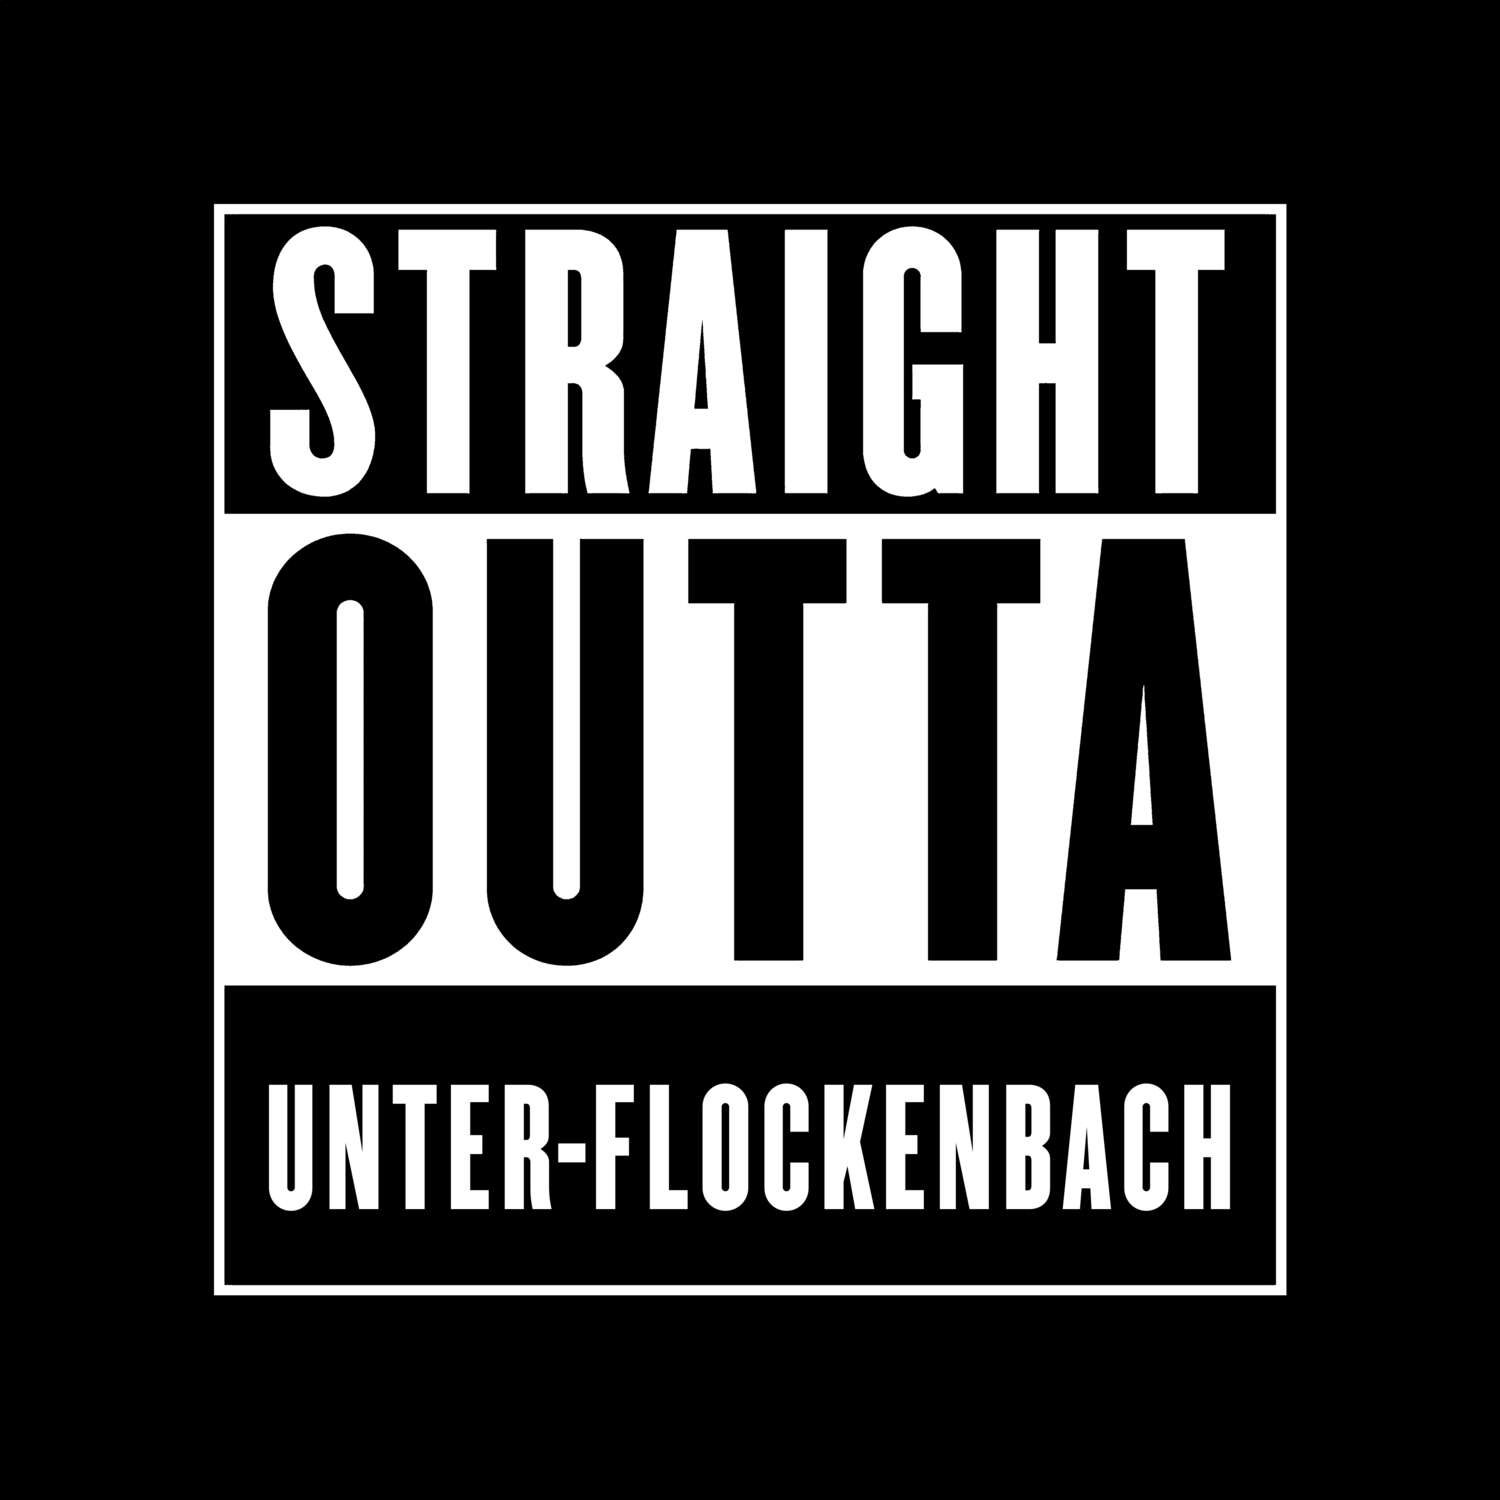 Unter-Flockenbach T-Shirt »Straight Outta«